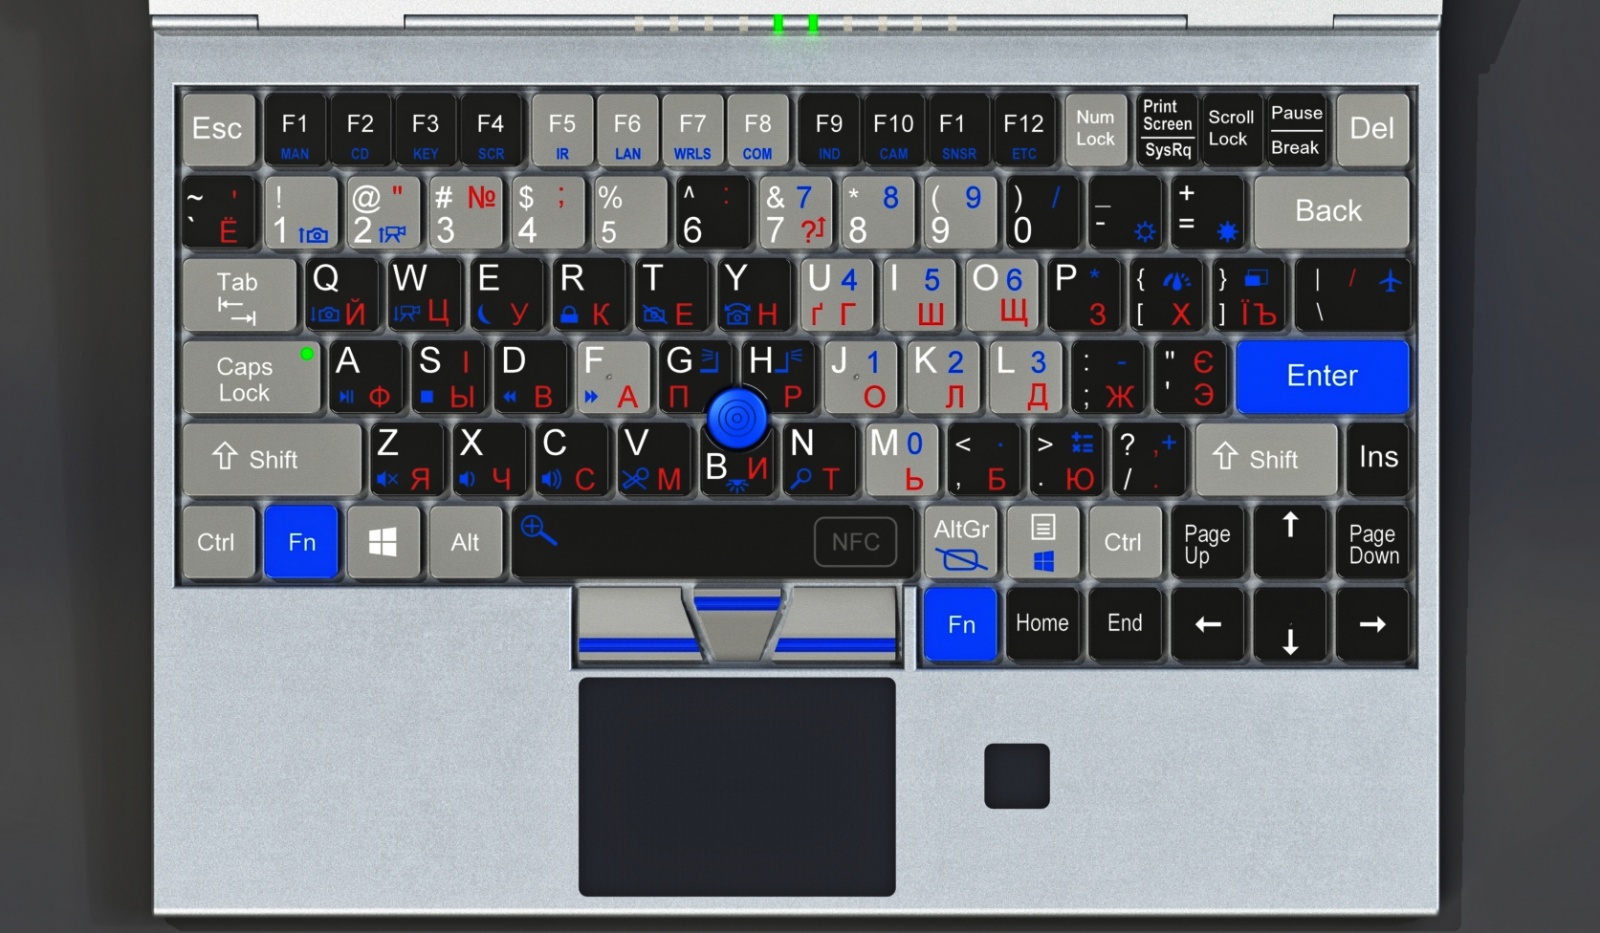 Adminbook A4 (keyboard)